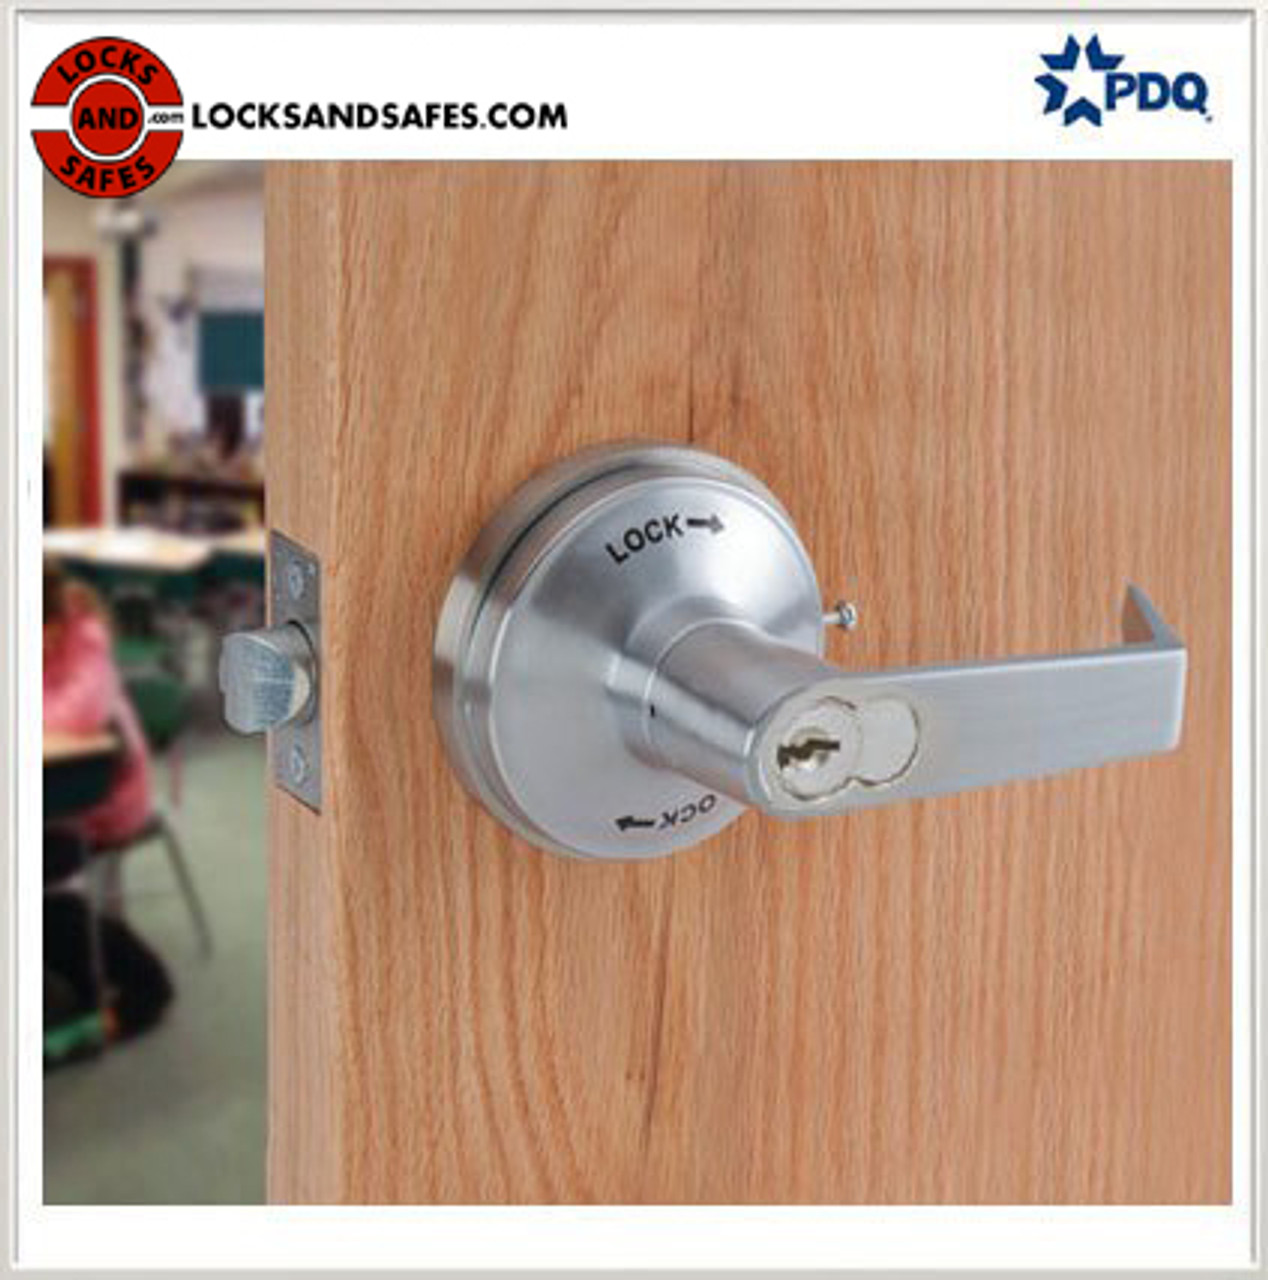 Alarm Lock Systems Inc. DL4100 US26D Trilogy Electronic Digital Lock Std Ko 26D, Satin Chrome by Alarm Lock - 4